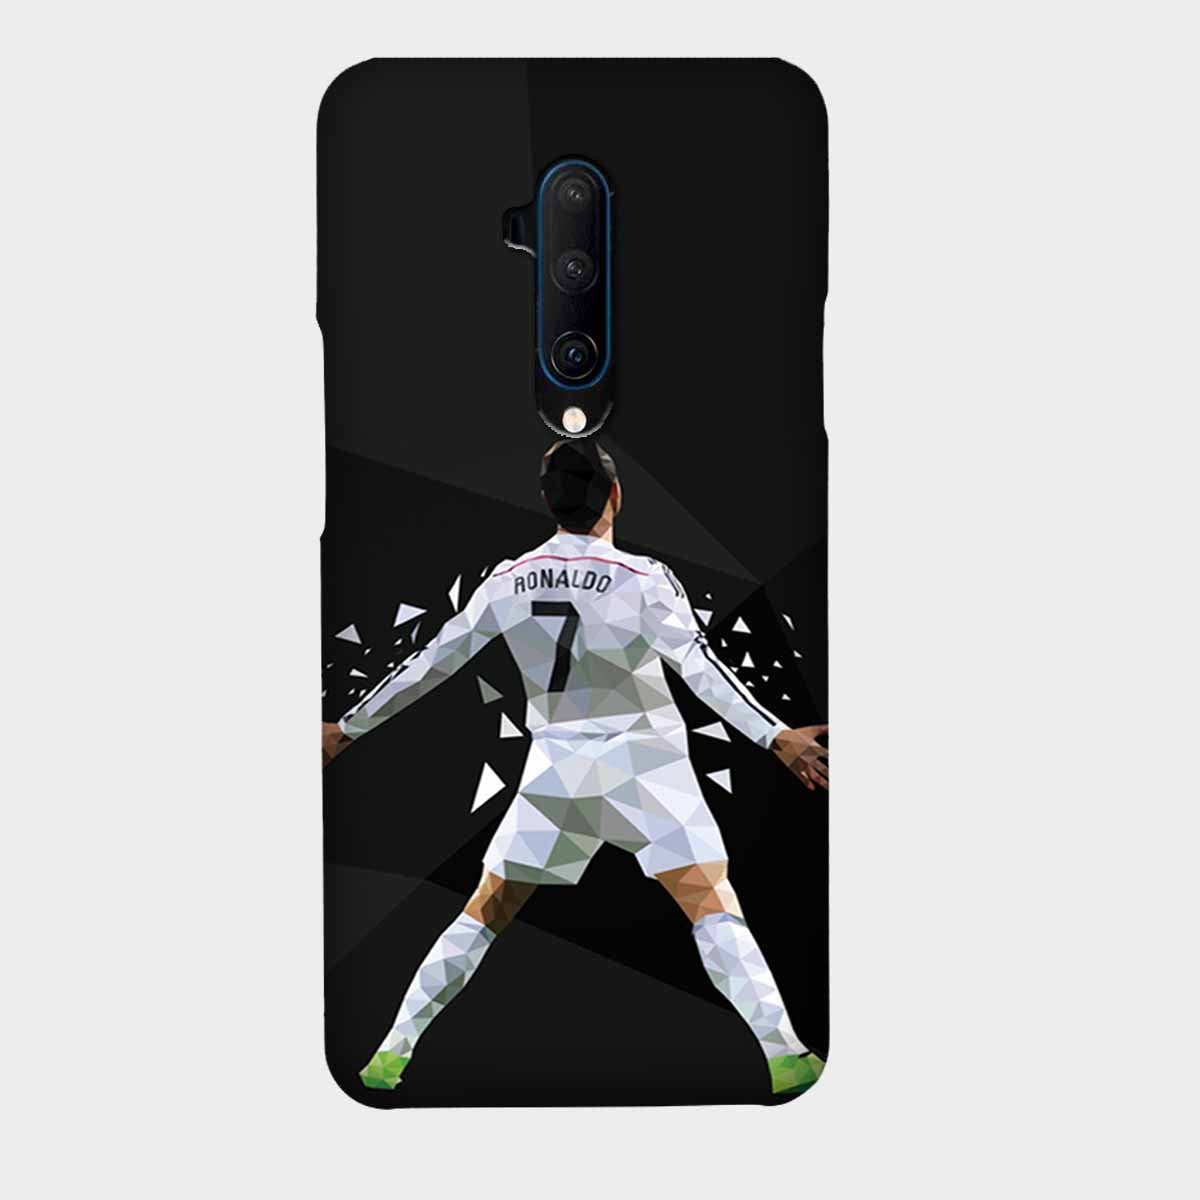 Cristiano Ronaldo Real Madrid - Mobile Phone Cover - Hard Case - OnePlus